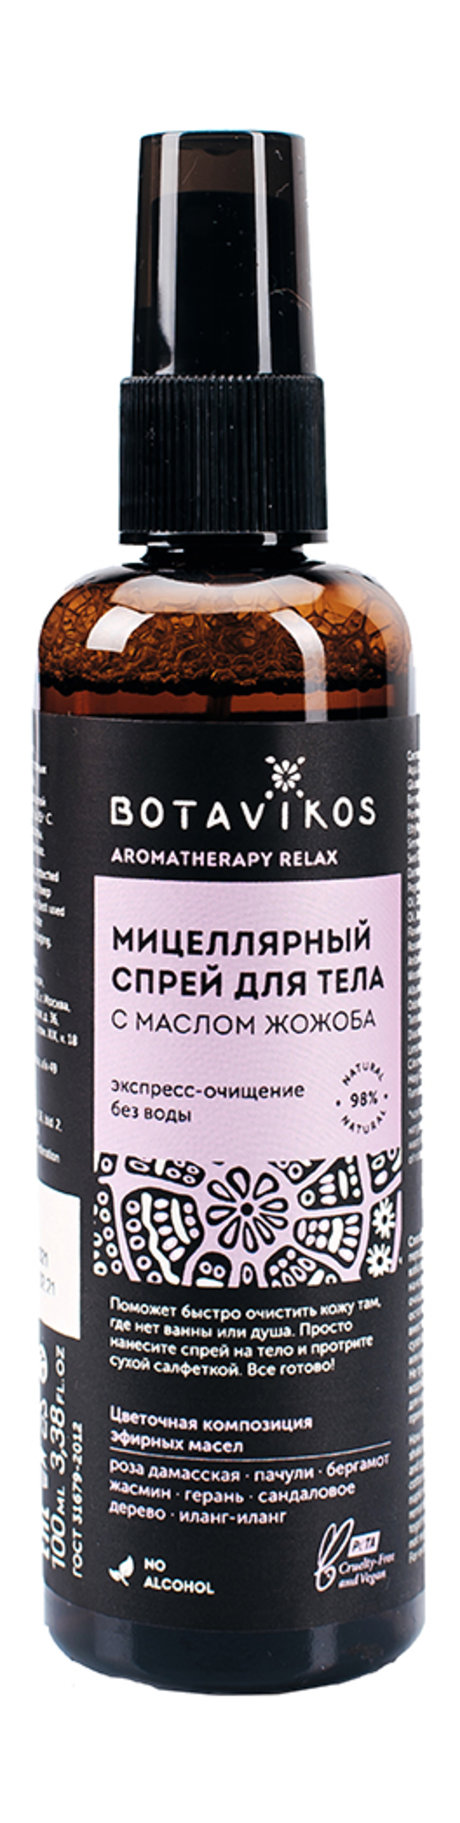 botavikos aromatherapy relax micellar body spray